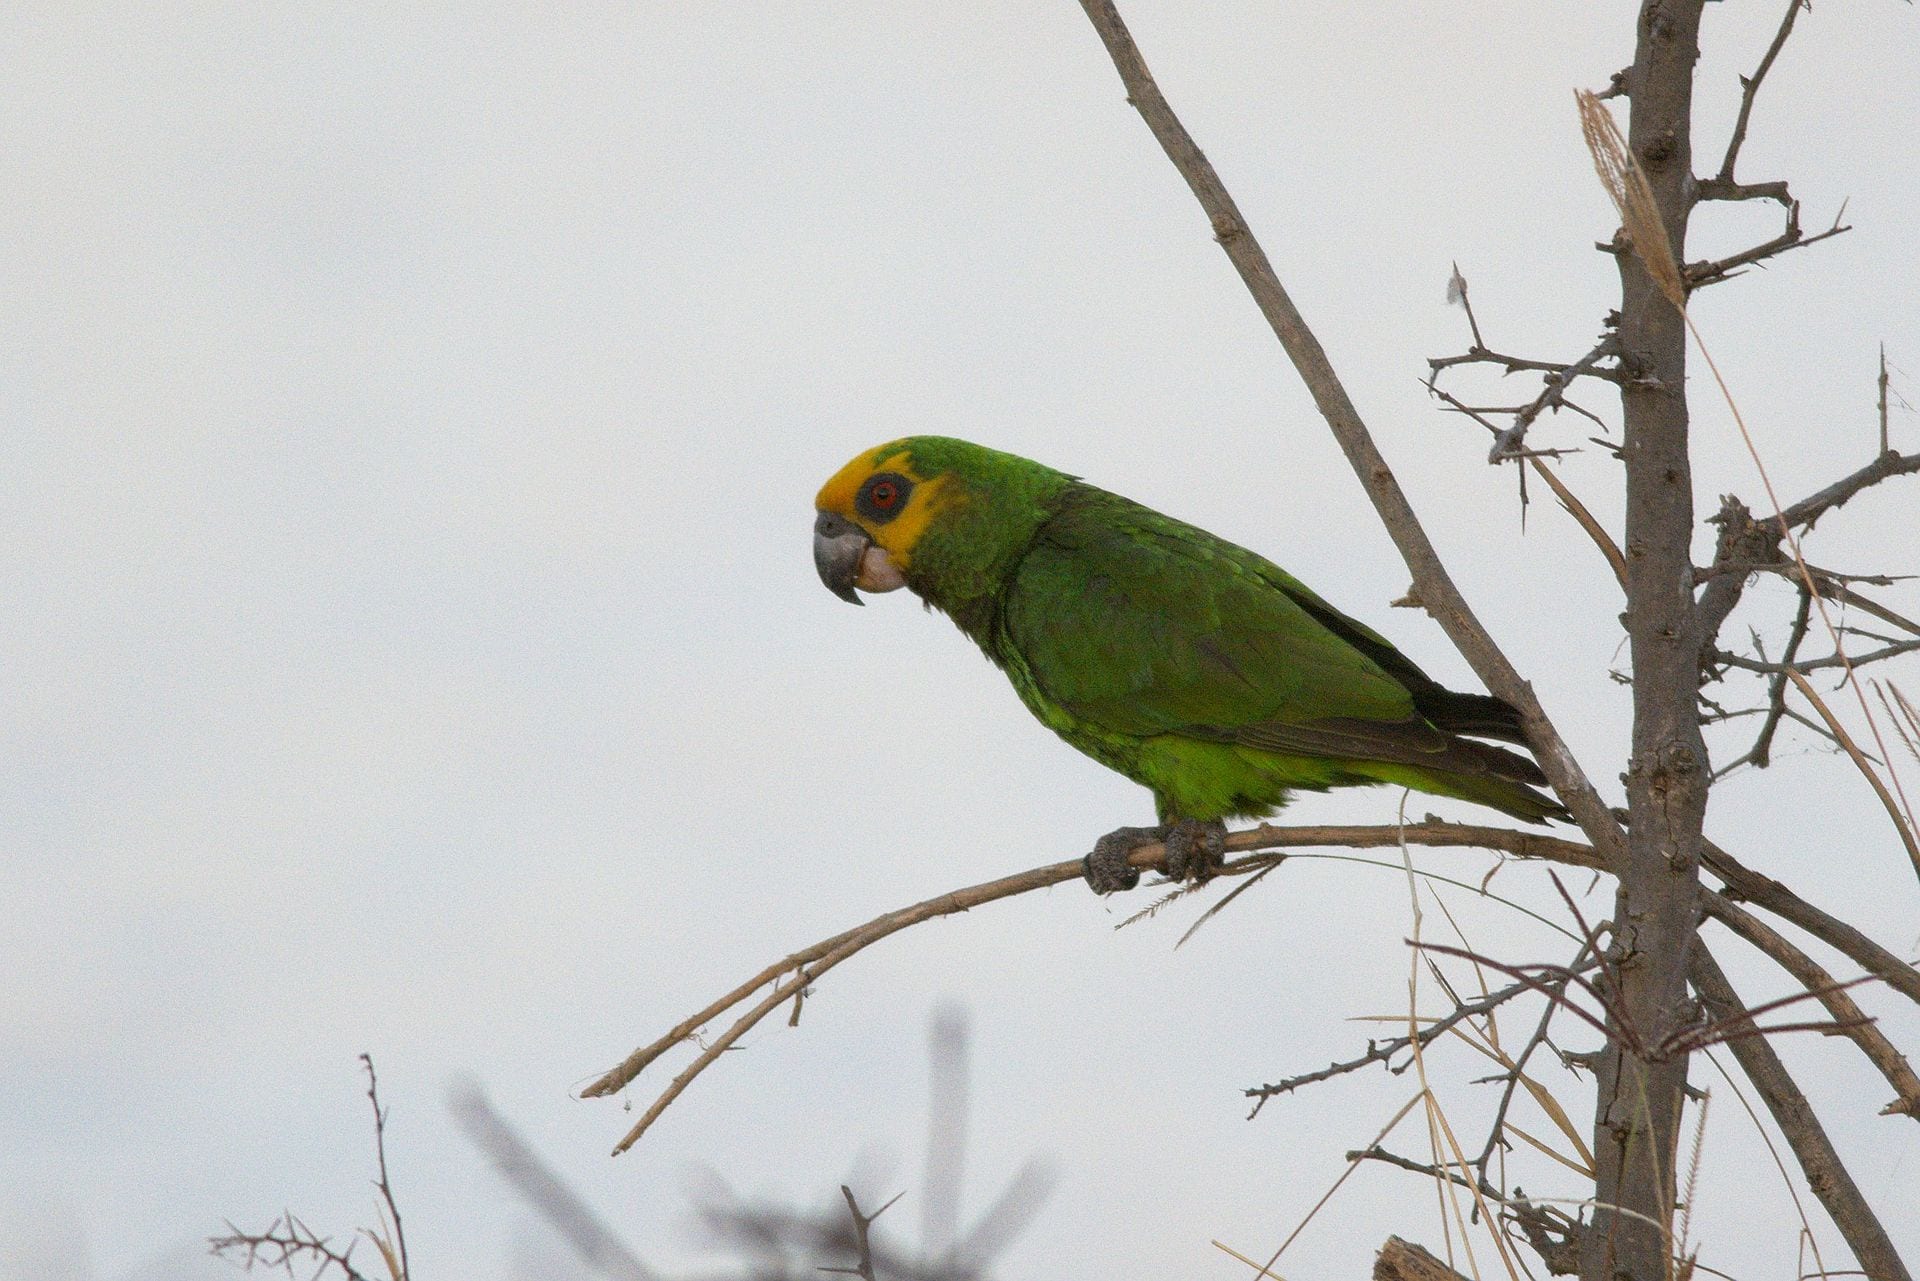 https://en.wikipedia.org/wiki/Yellow-fronted_parrot#/media/File:Poicephalus_flavifrons_-near_Bishangari_Lodge,_Ethiopia-8.jpg